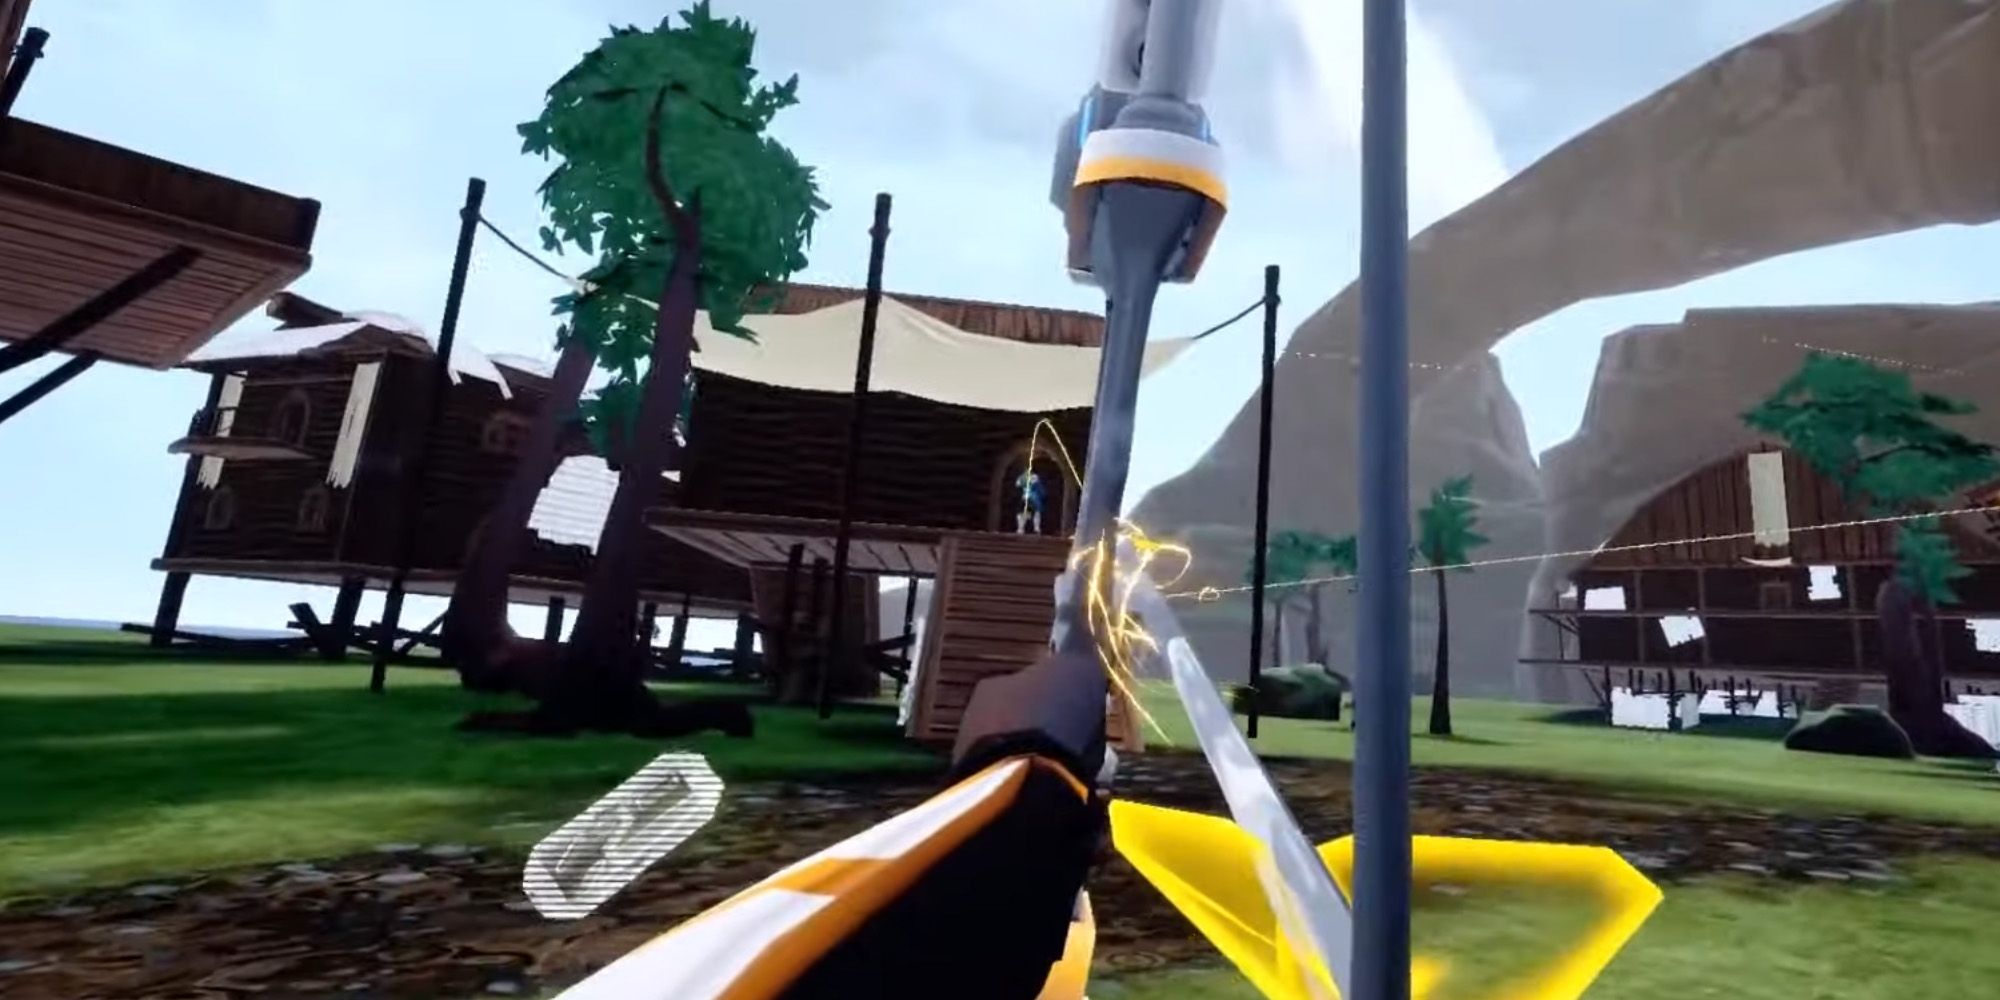 Atlas Endgames VR battle royale looks similar to fortnite but with apex legends like flow